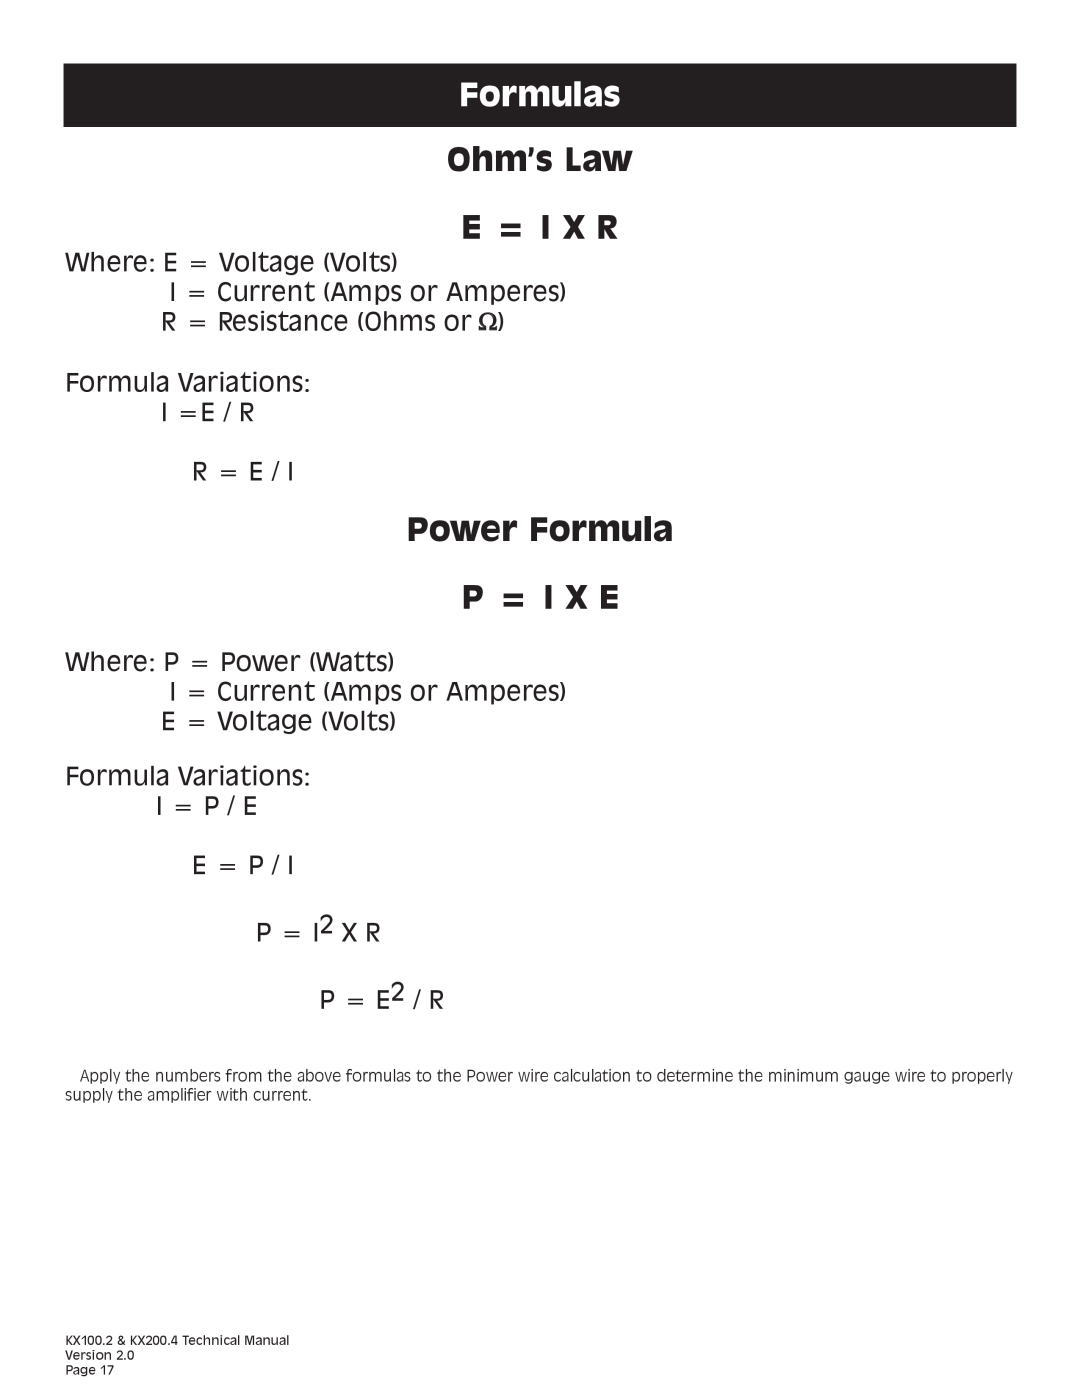 Kicker KX200.4 technical manual Formulas, Ohm’s Law E = I X R, Power Formula P = I X E 